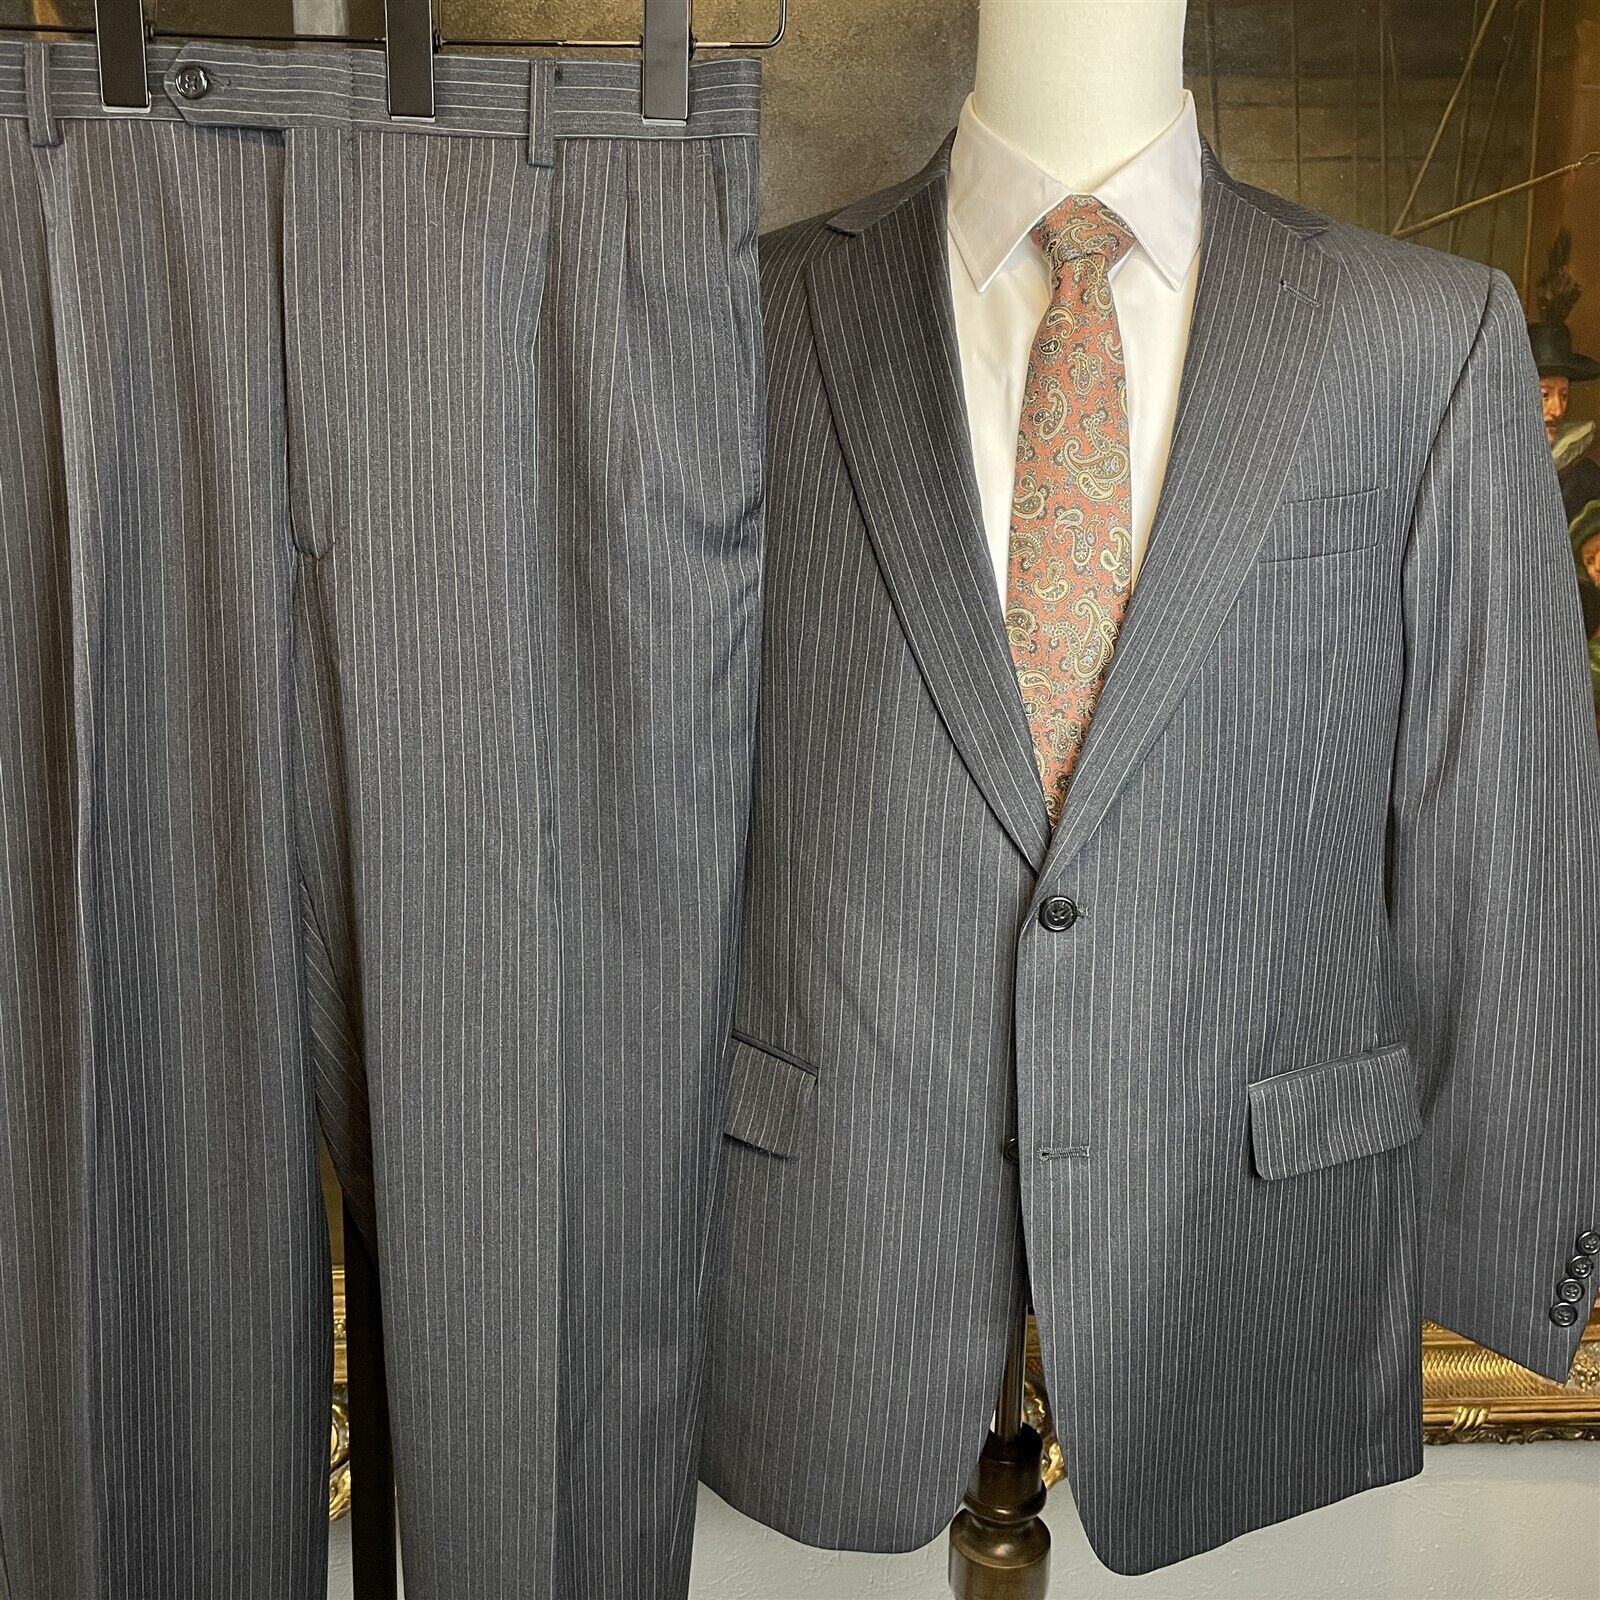 Hart Schaffner Marx 41R 34 x 32 USA MADE 2Pc Gray Pinstriped 100% Wool 2Btn Suit